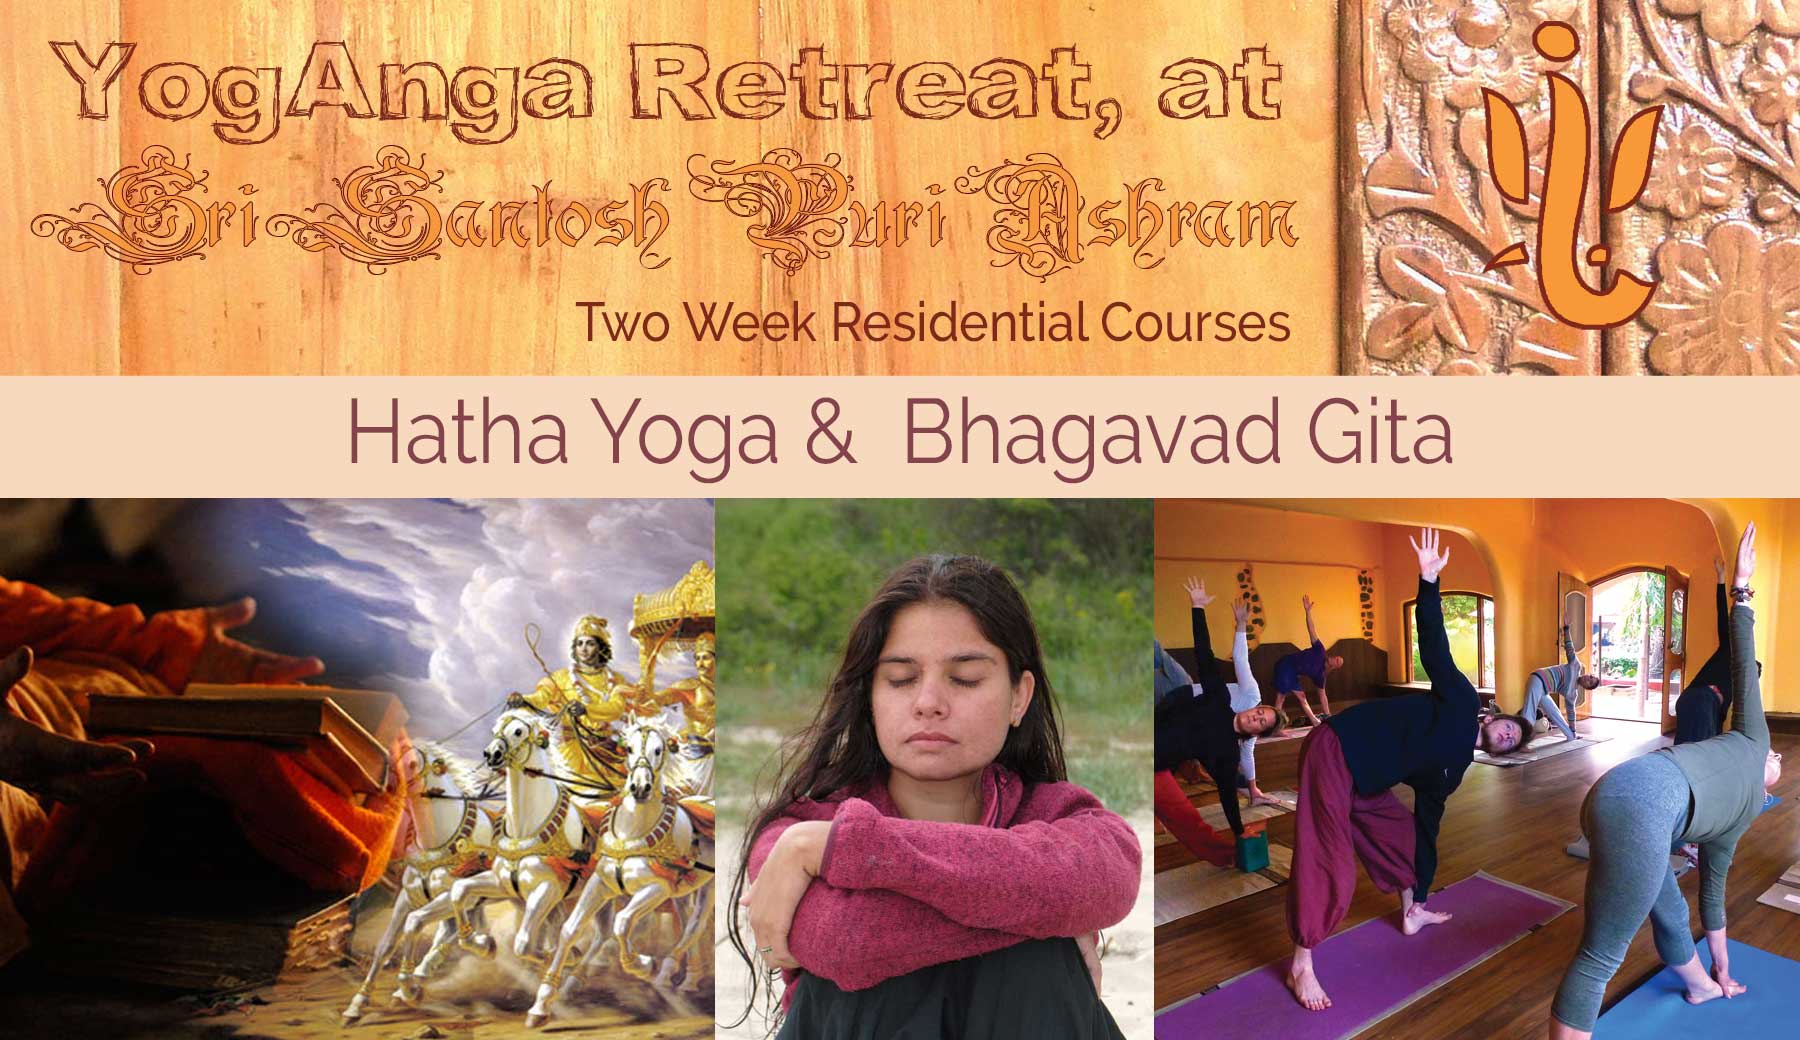 yoganga.org - YogAnga Retreat at Sri Santosh Puri Ashram - Hatha Yoga, asana, pranayam, & Bhagavad Gita two week Residential Course with Alaknanda Puri